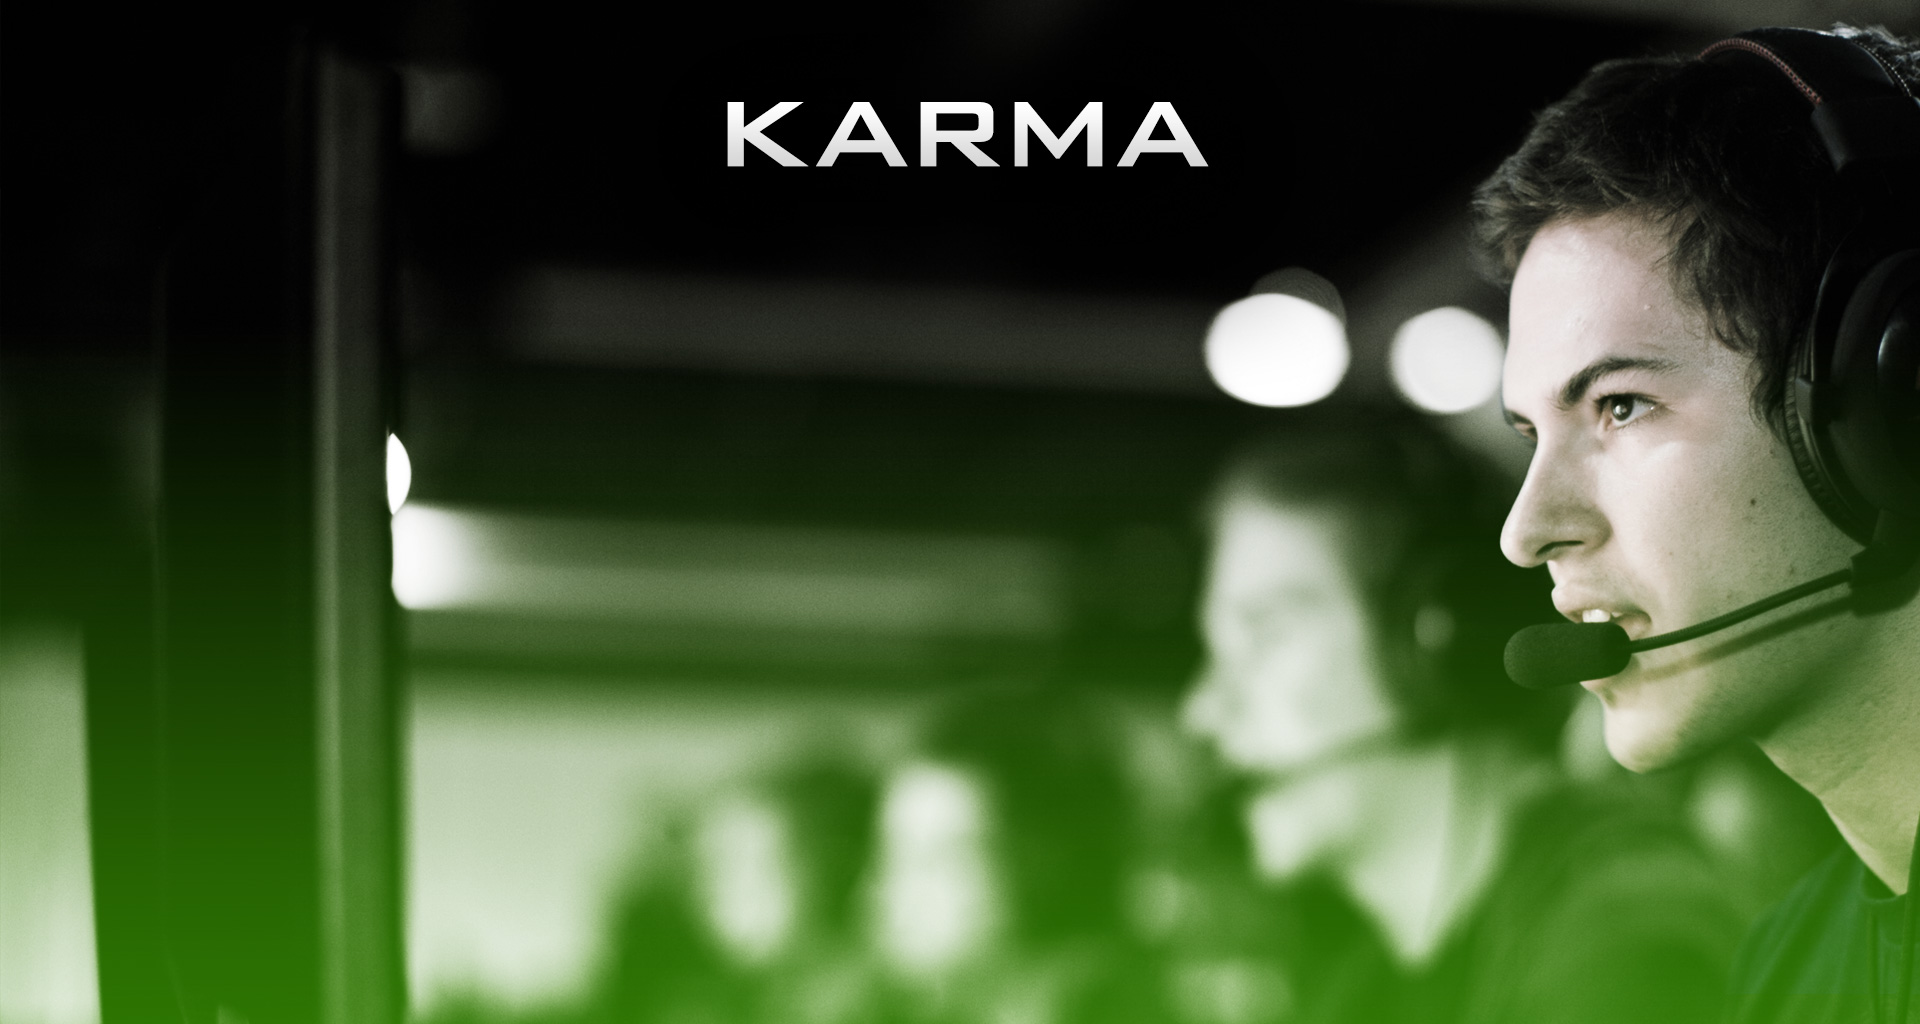 karma wallpaper,green,photograph,text,font,eye